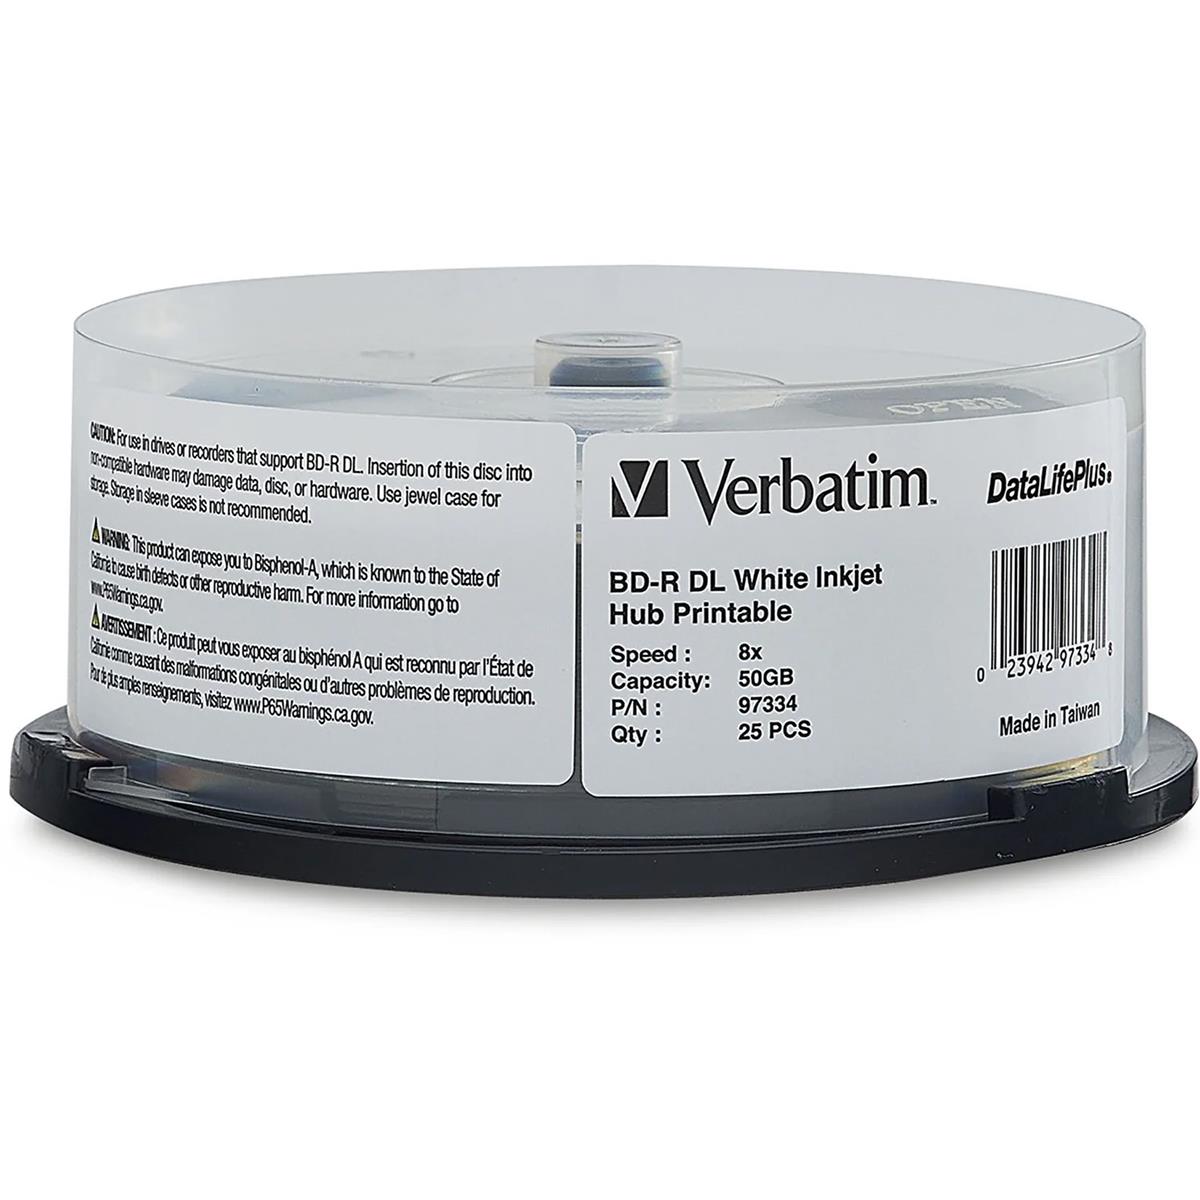 Image of Verbatim BD-R DL 50GB 8x White InkJet Hub Printable Disc